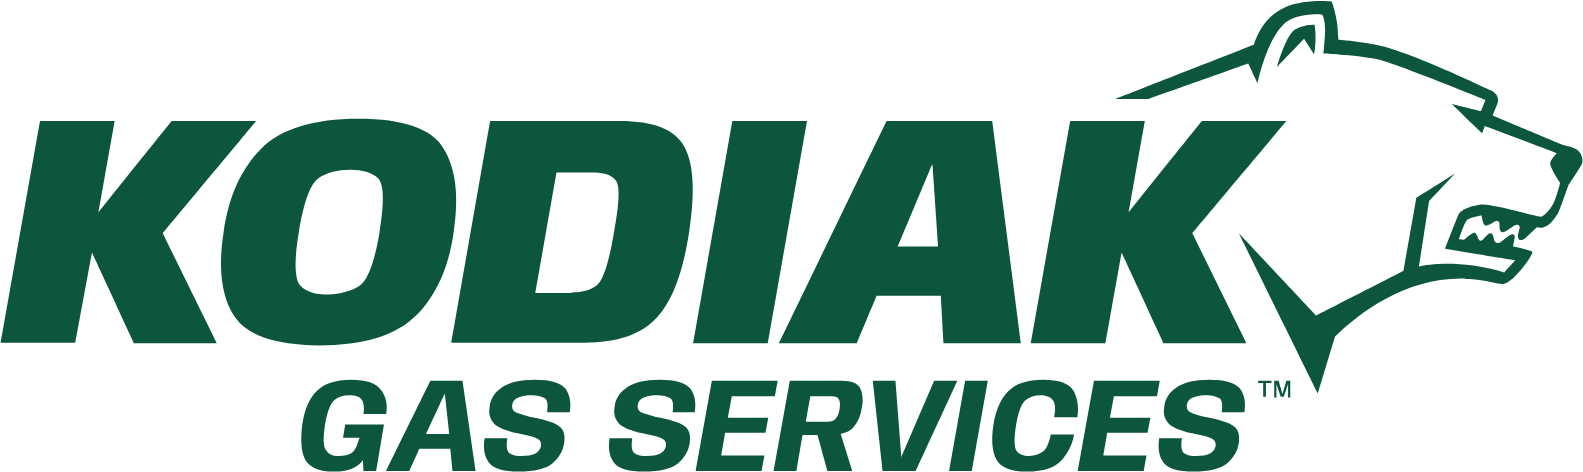 Kodiak Gas Services logo large (transparent PNG)